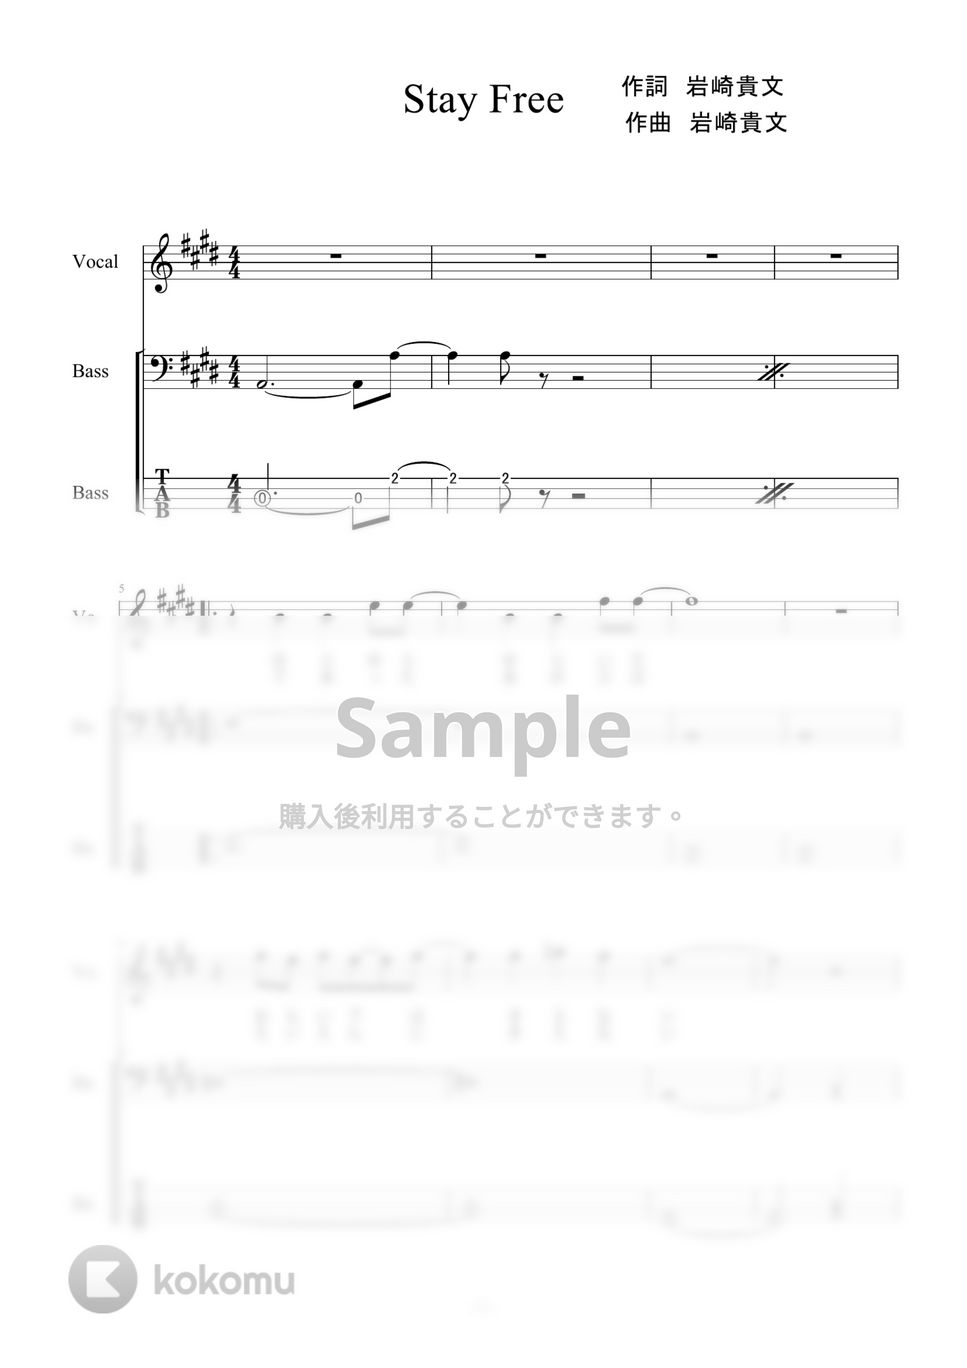 Machico - STAY FREE (ベース) by 二次元楽譜製作所